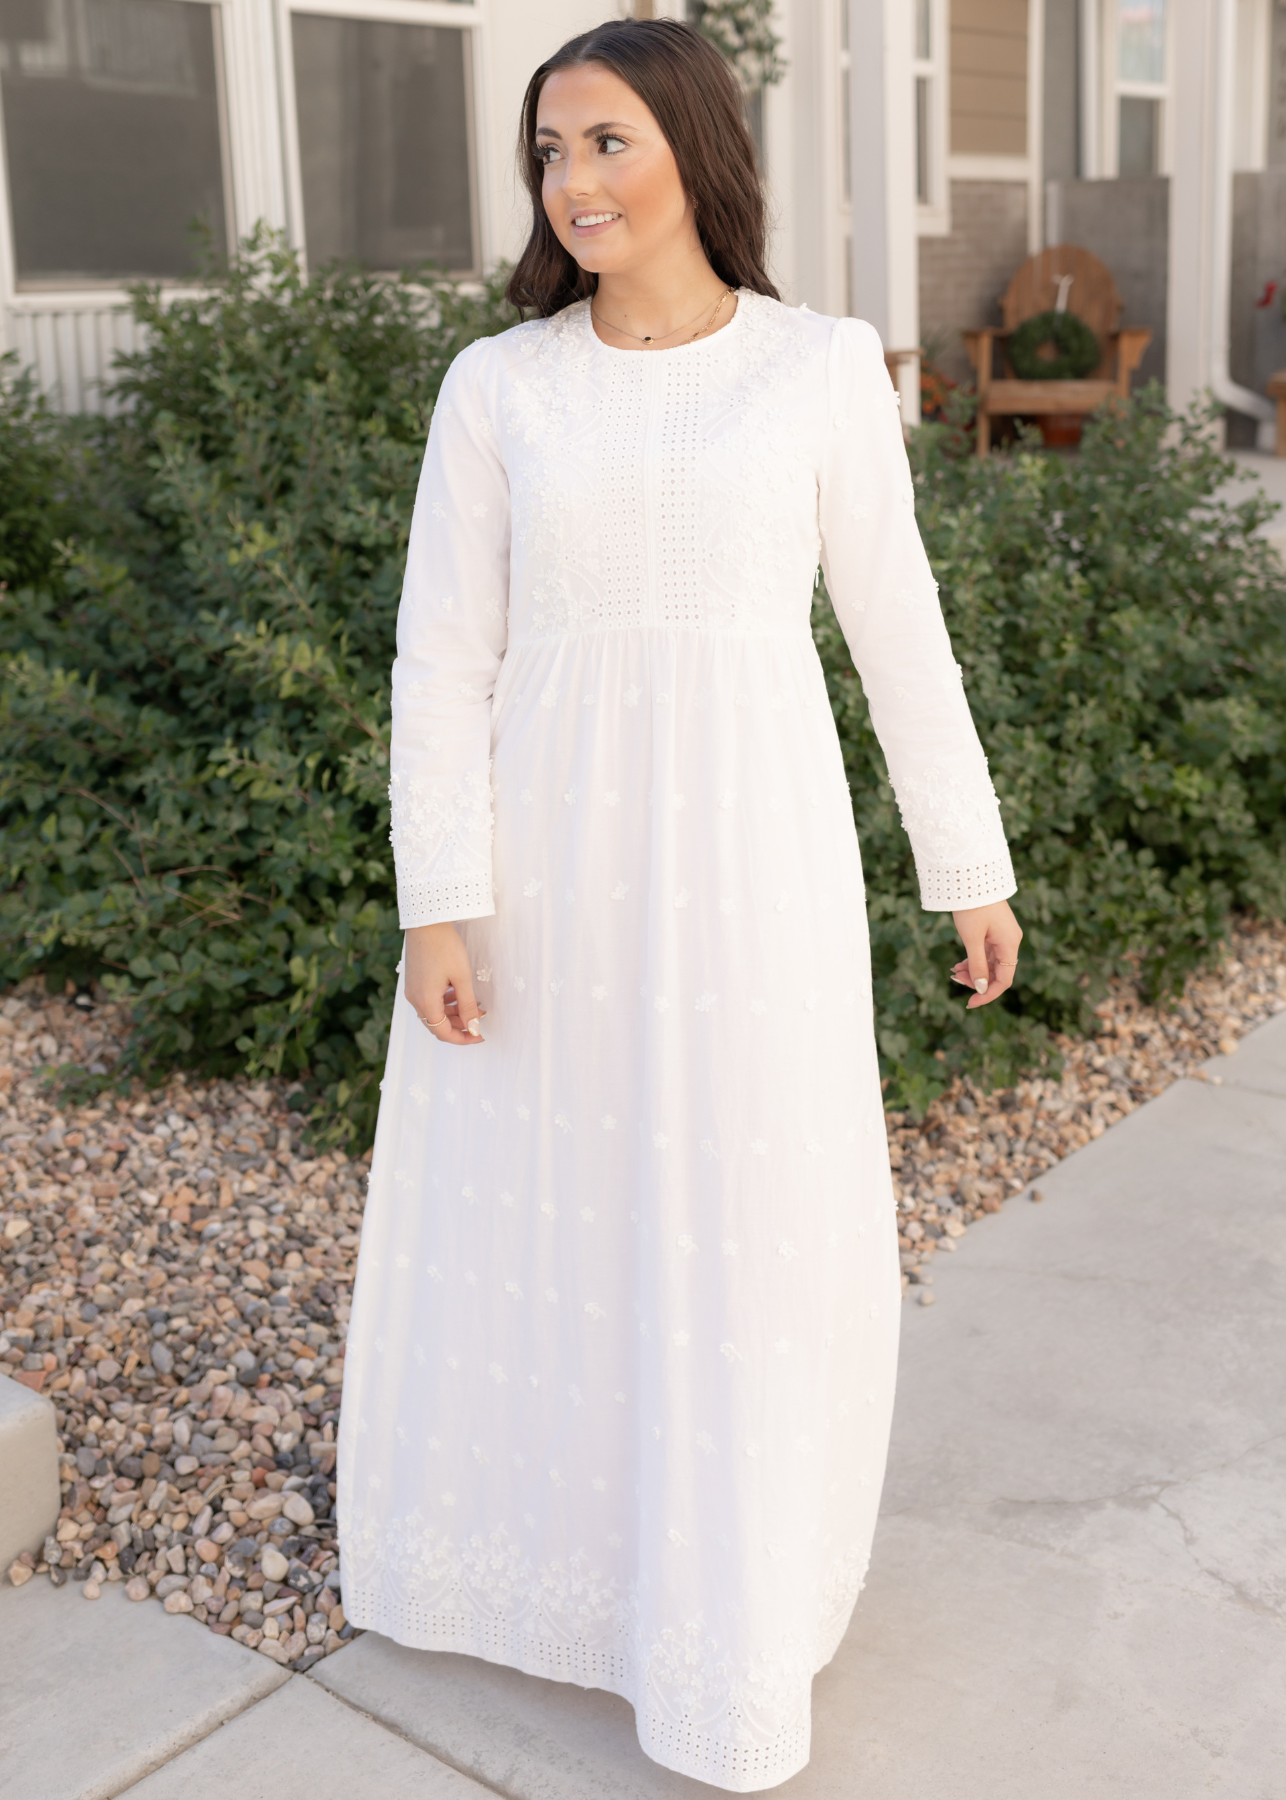 Kelsey White Floral Dress